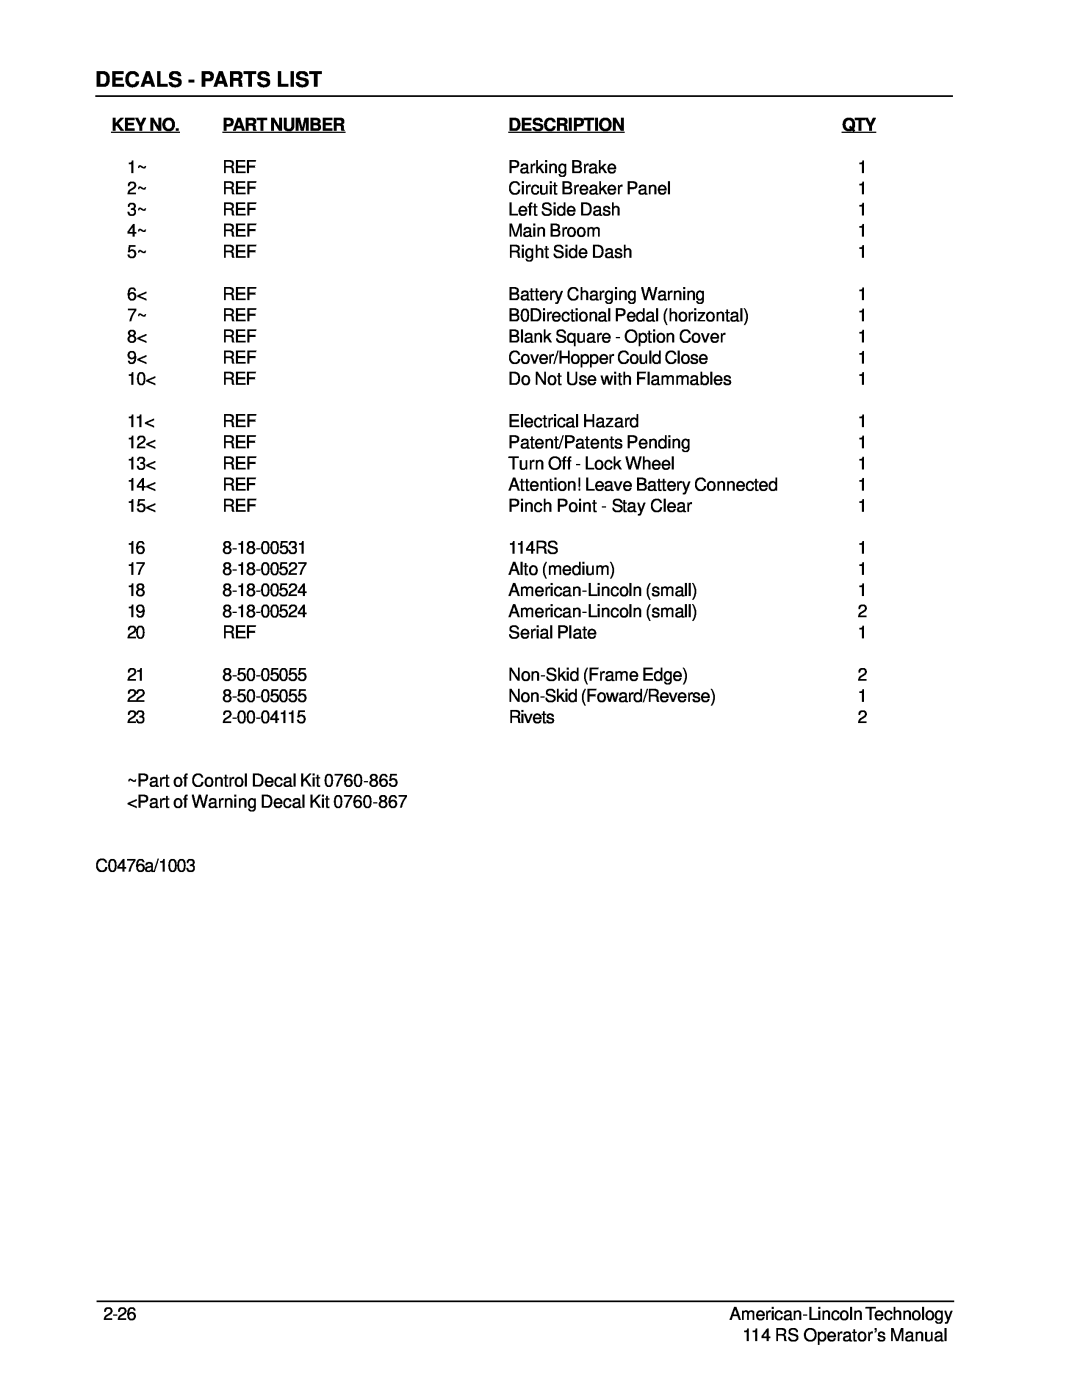 Nilfisk-ALTO 114RS SWEEPER manual Decals - Parts List, Part Number, Description 